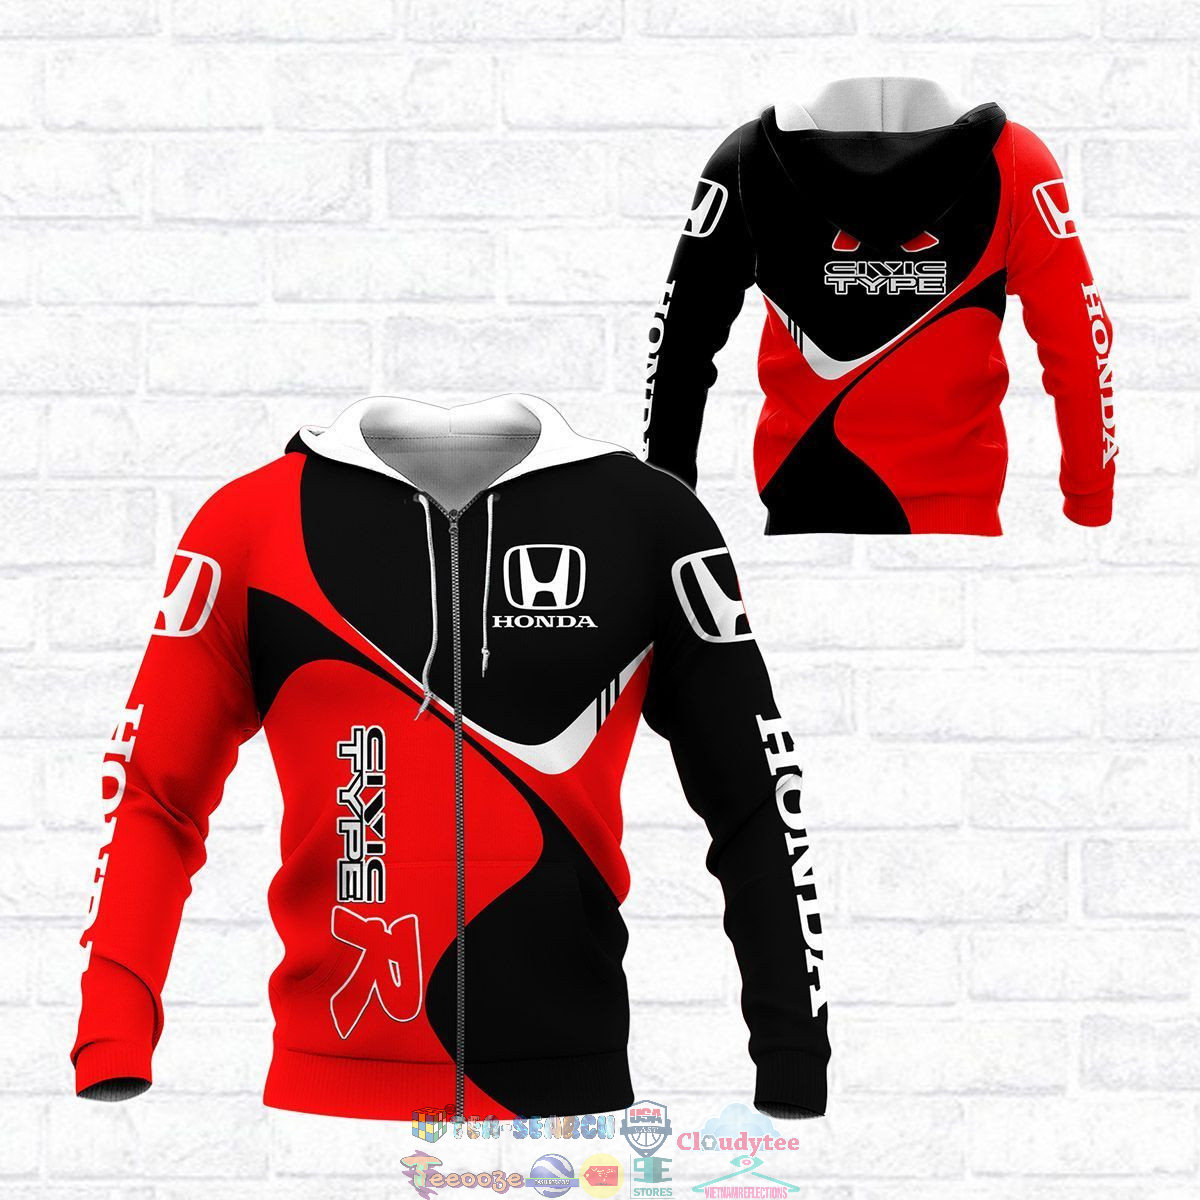 Honda Civic Type R ver 9 3D hoodie and t-shirt